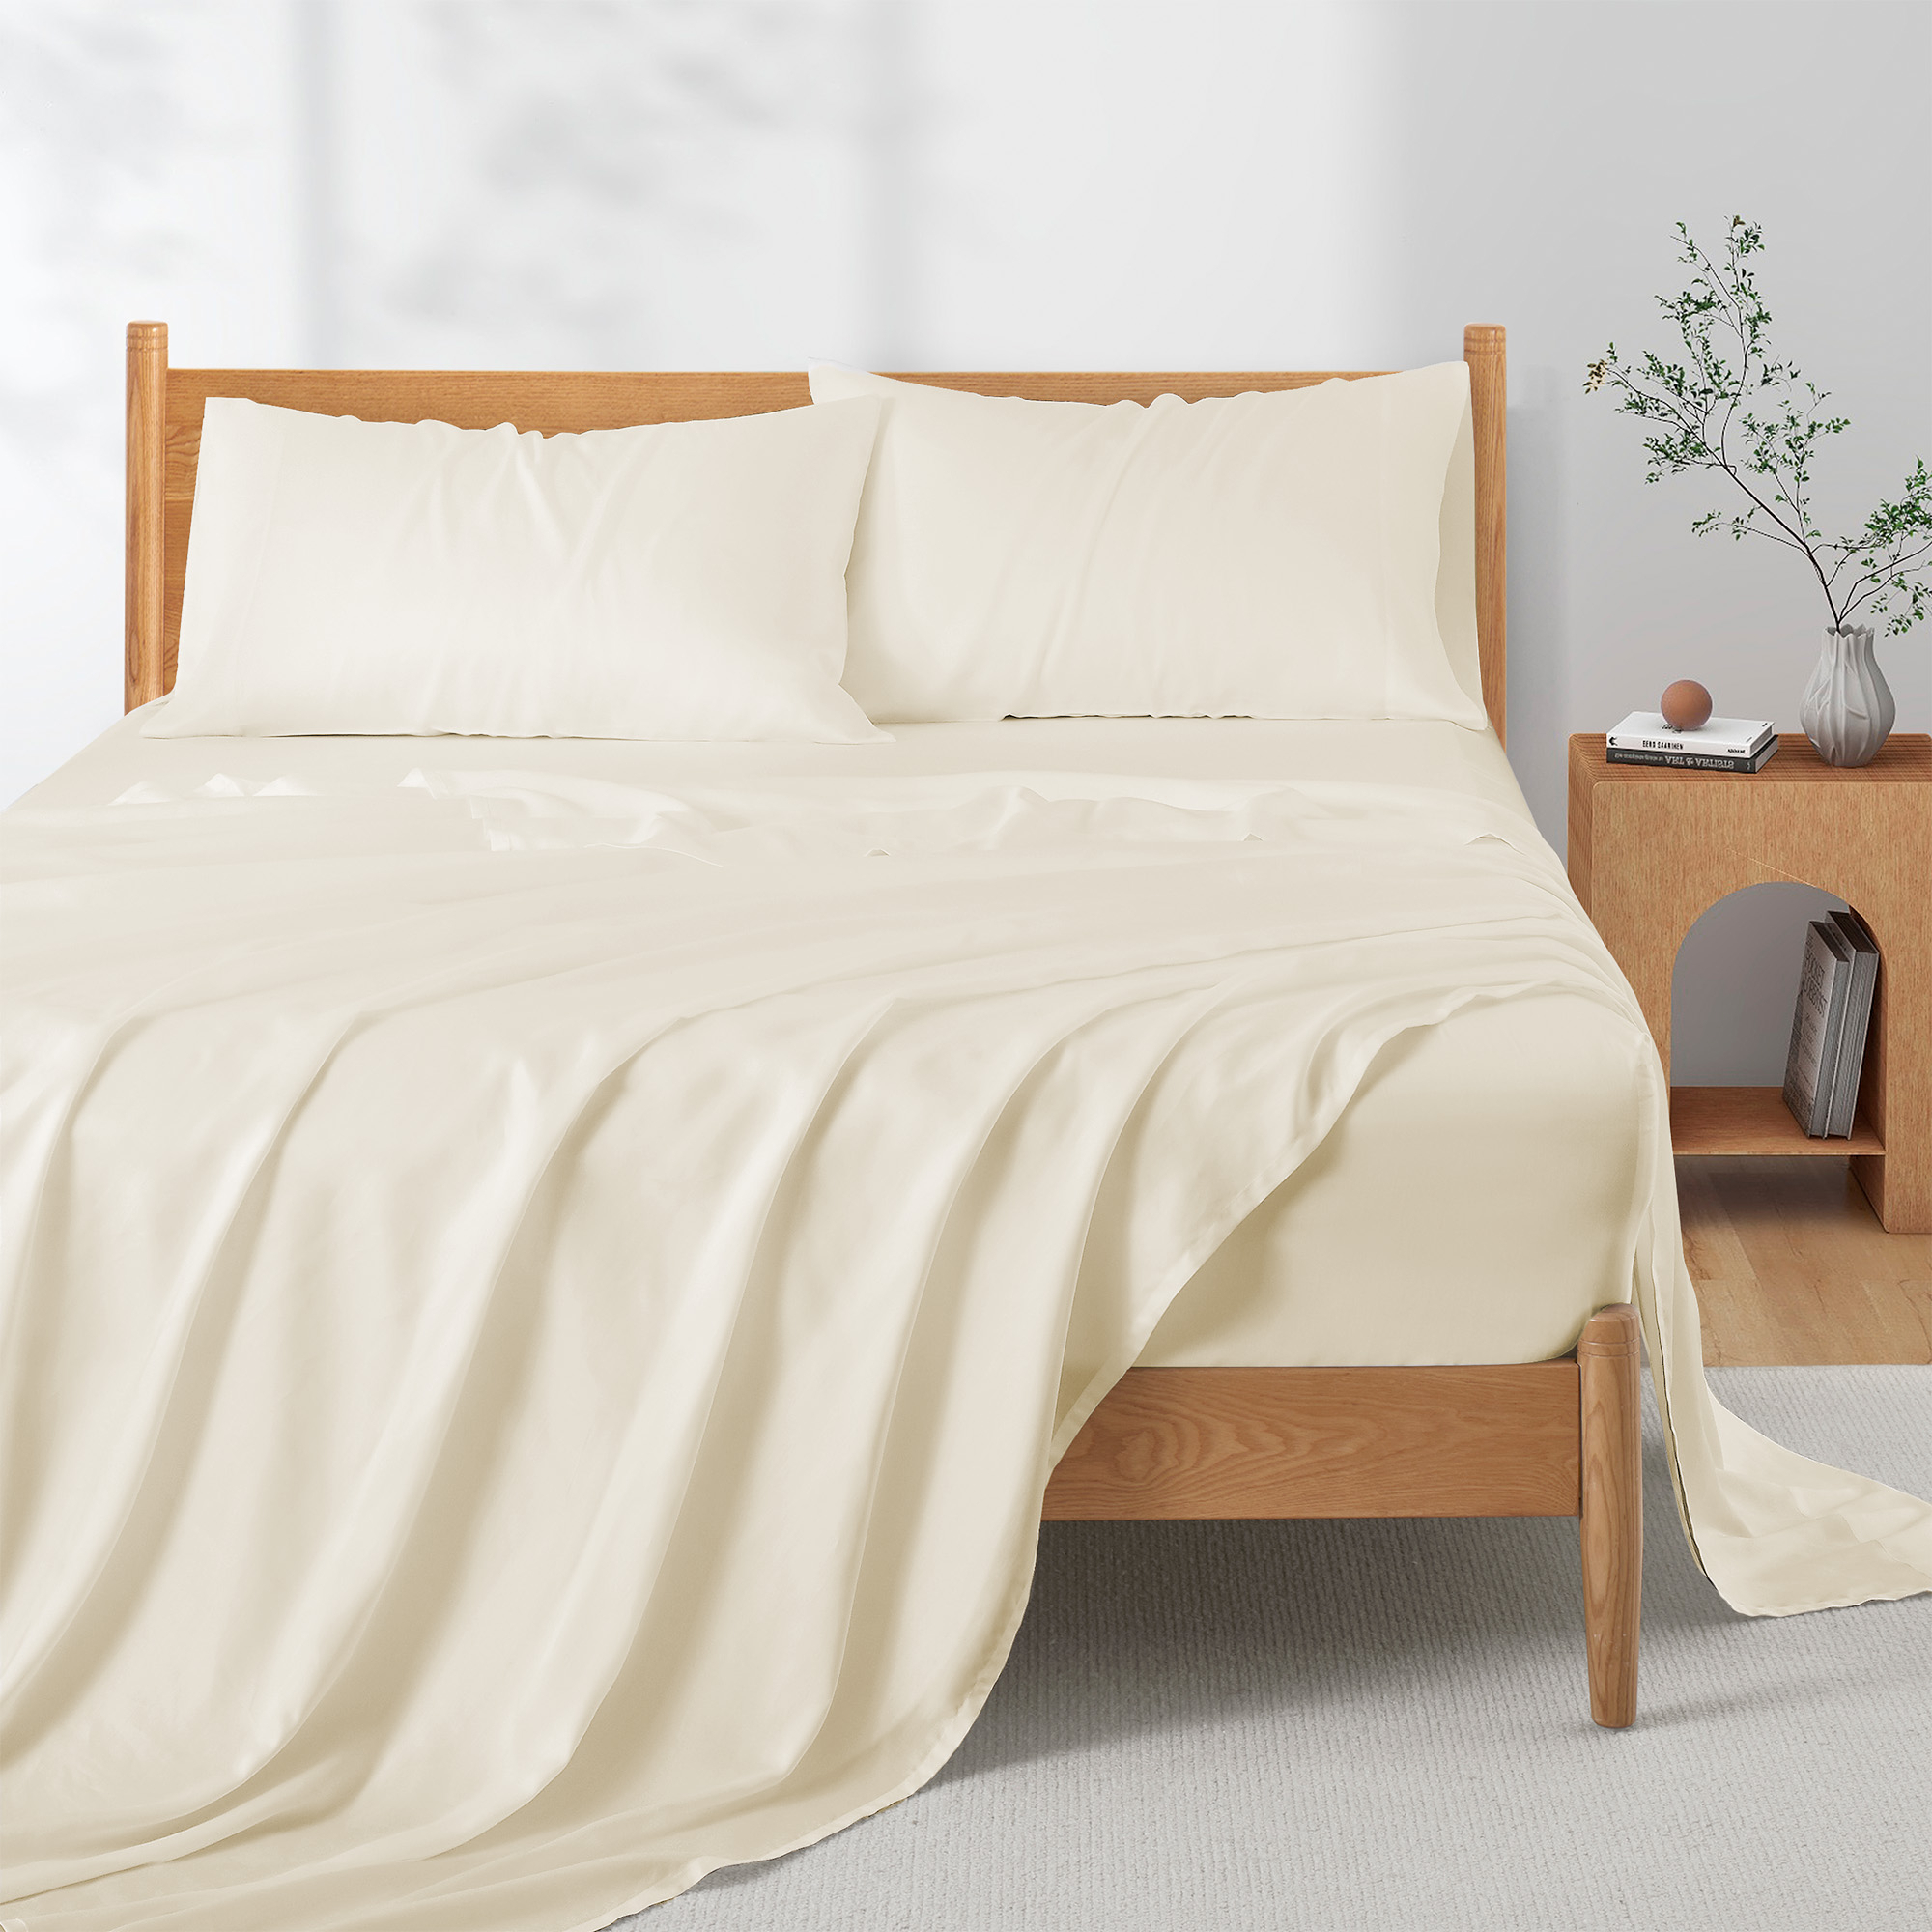 Silky Soft TENCELâ¢ Lyocell Cooling Sheet Set-Breathability And Moisture-wicking Bedding Set - Cannoli Cream, Full